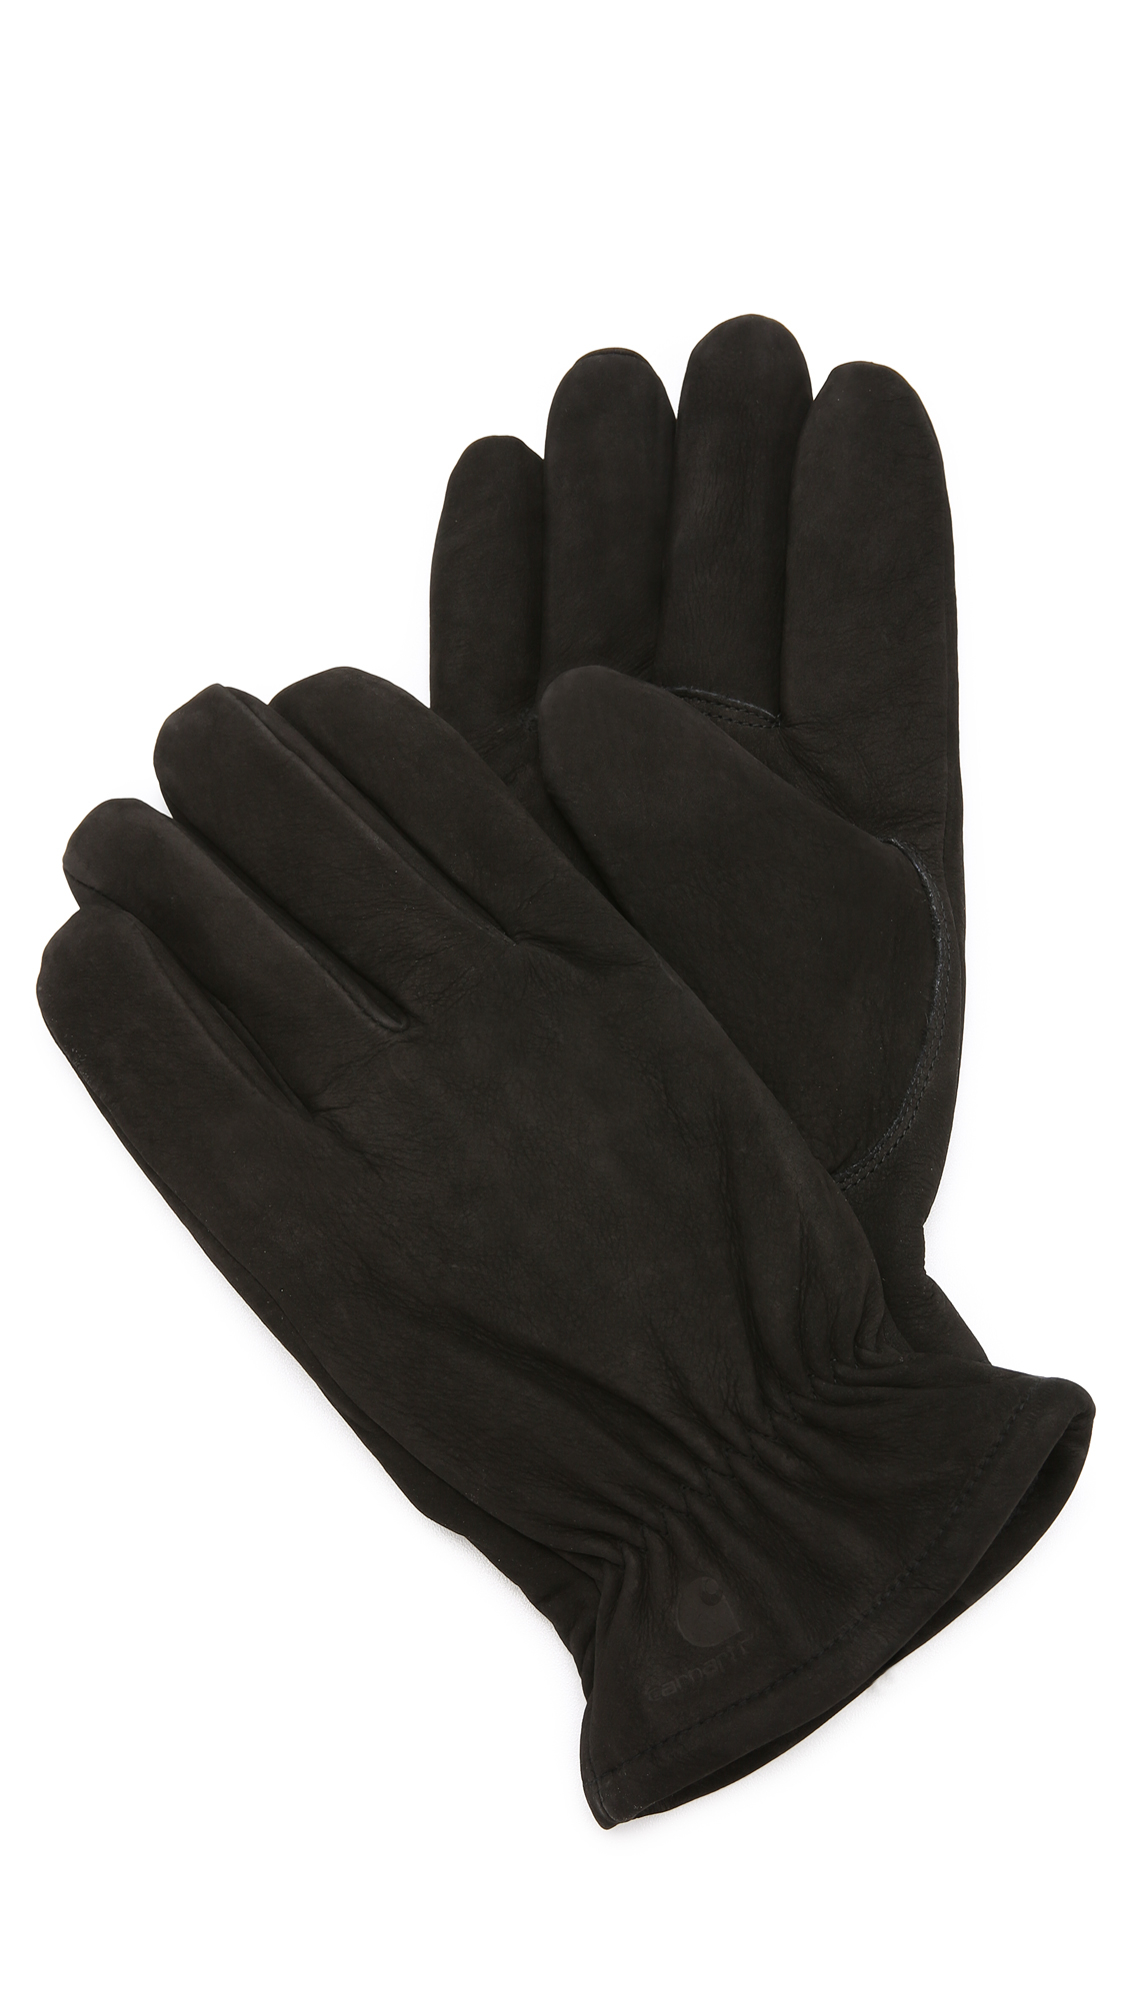 Carhartt WIP Fleece Vostok Gloves in Black for Men - Lyst